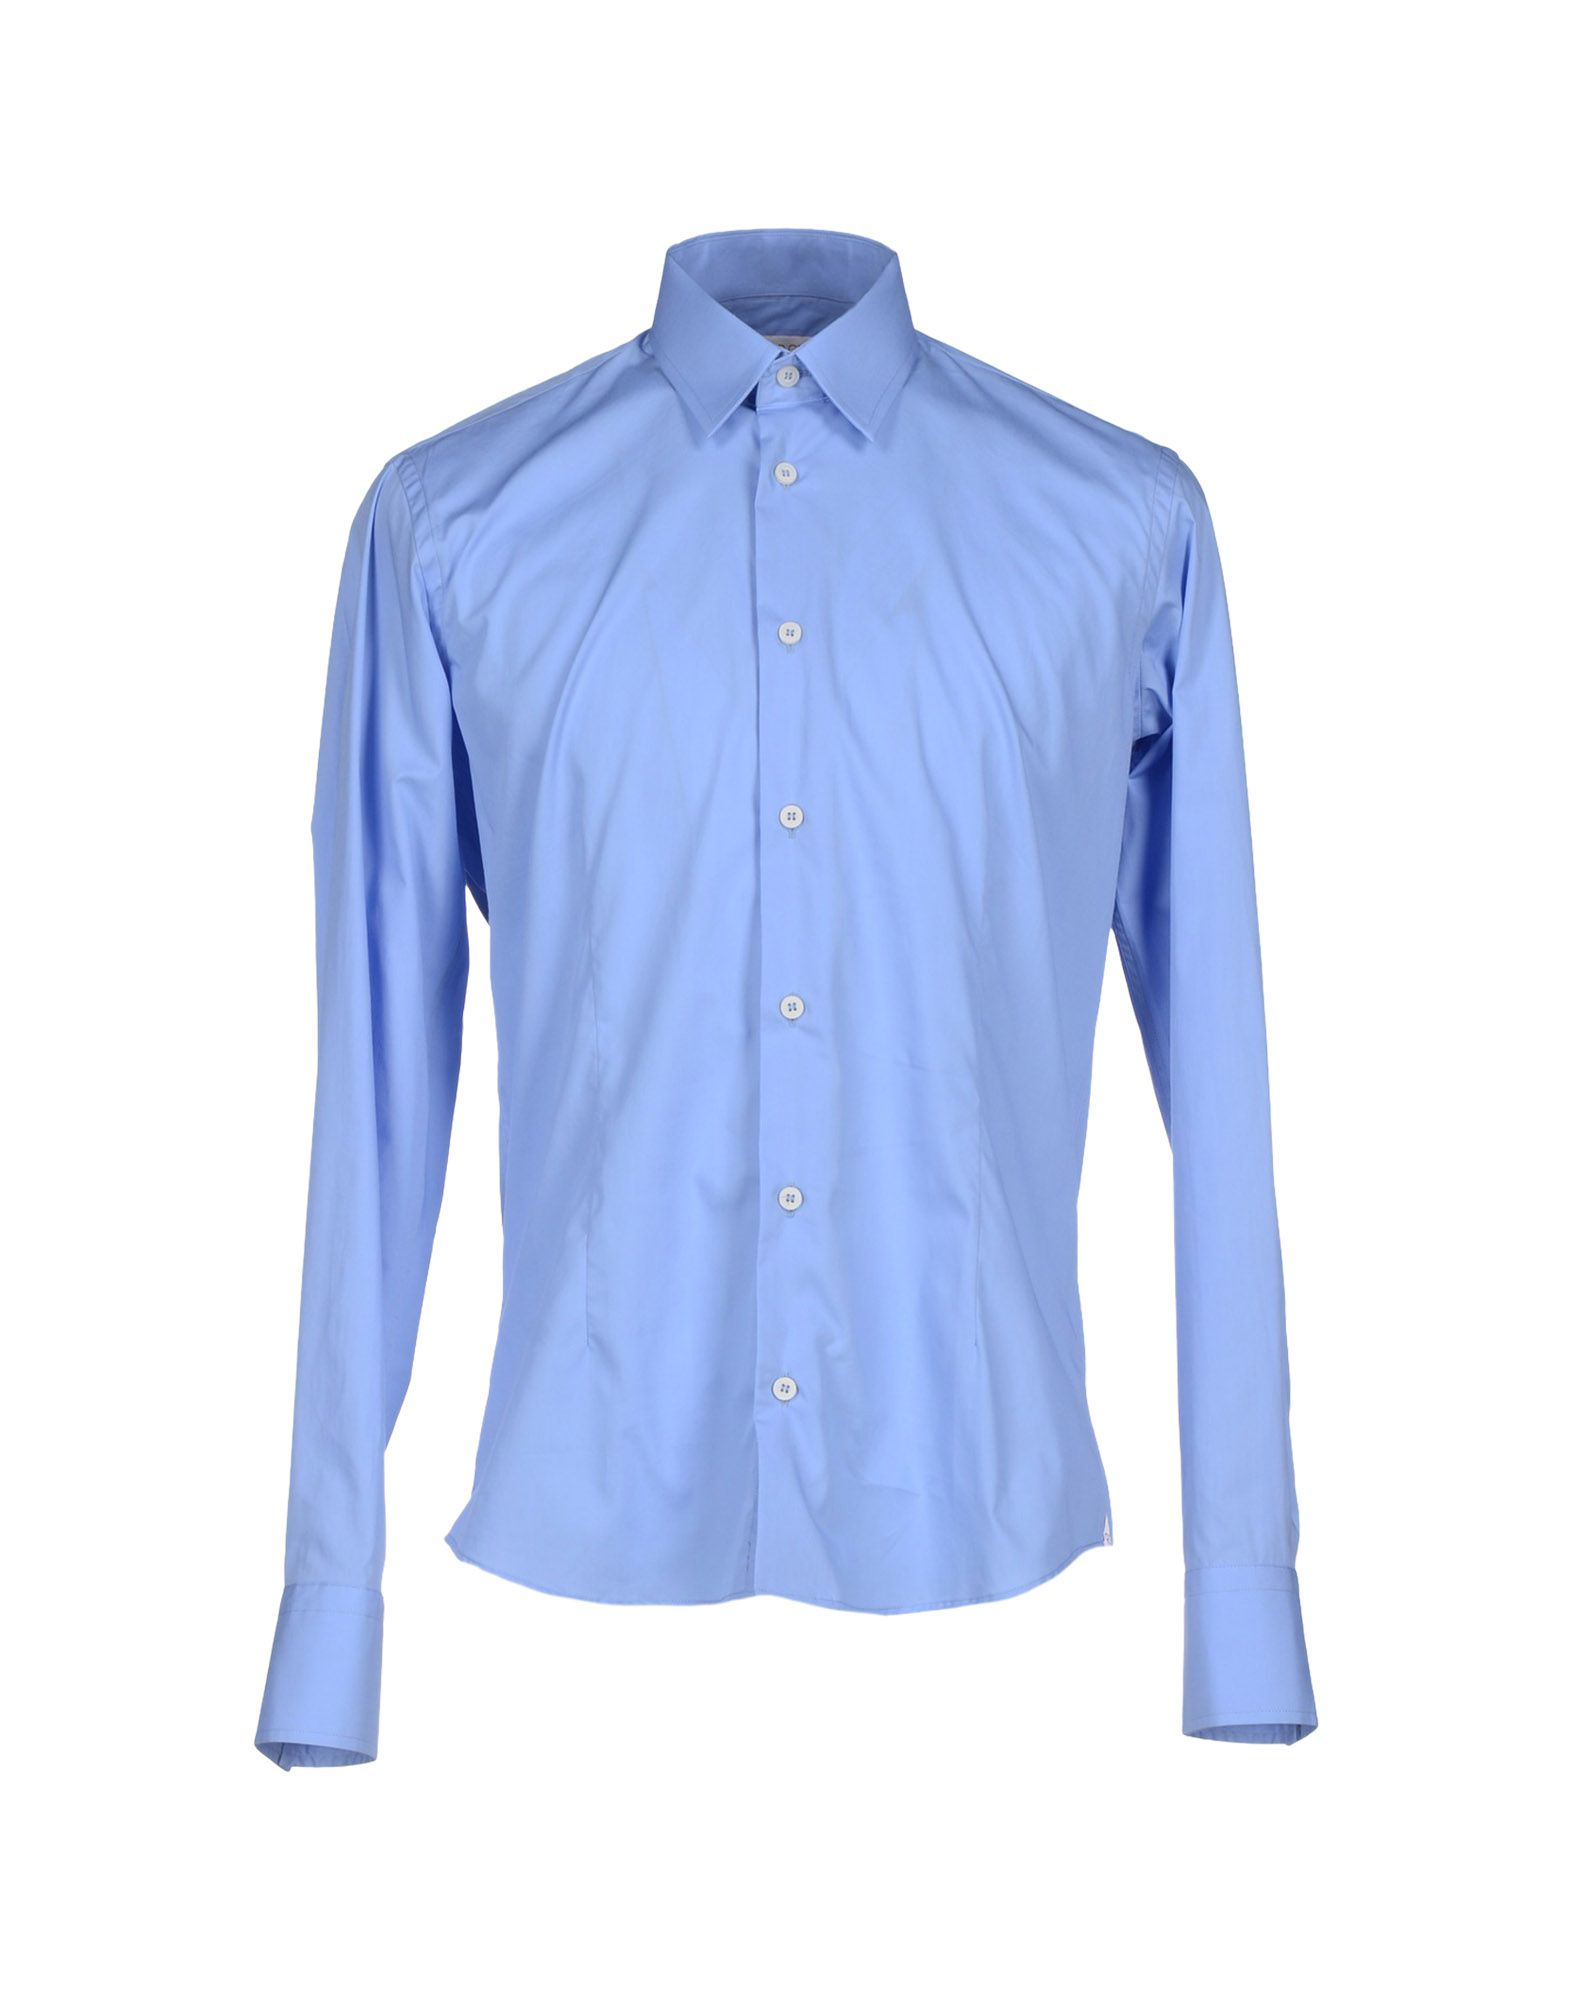 Lyst - Romeo Gigli Shirt in Blue for Men